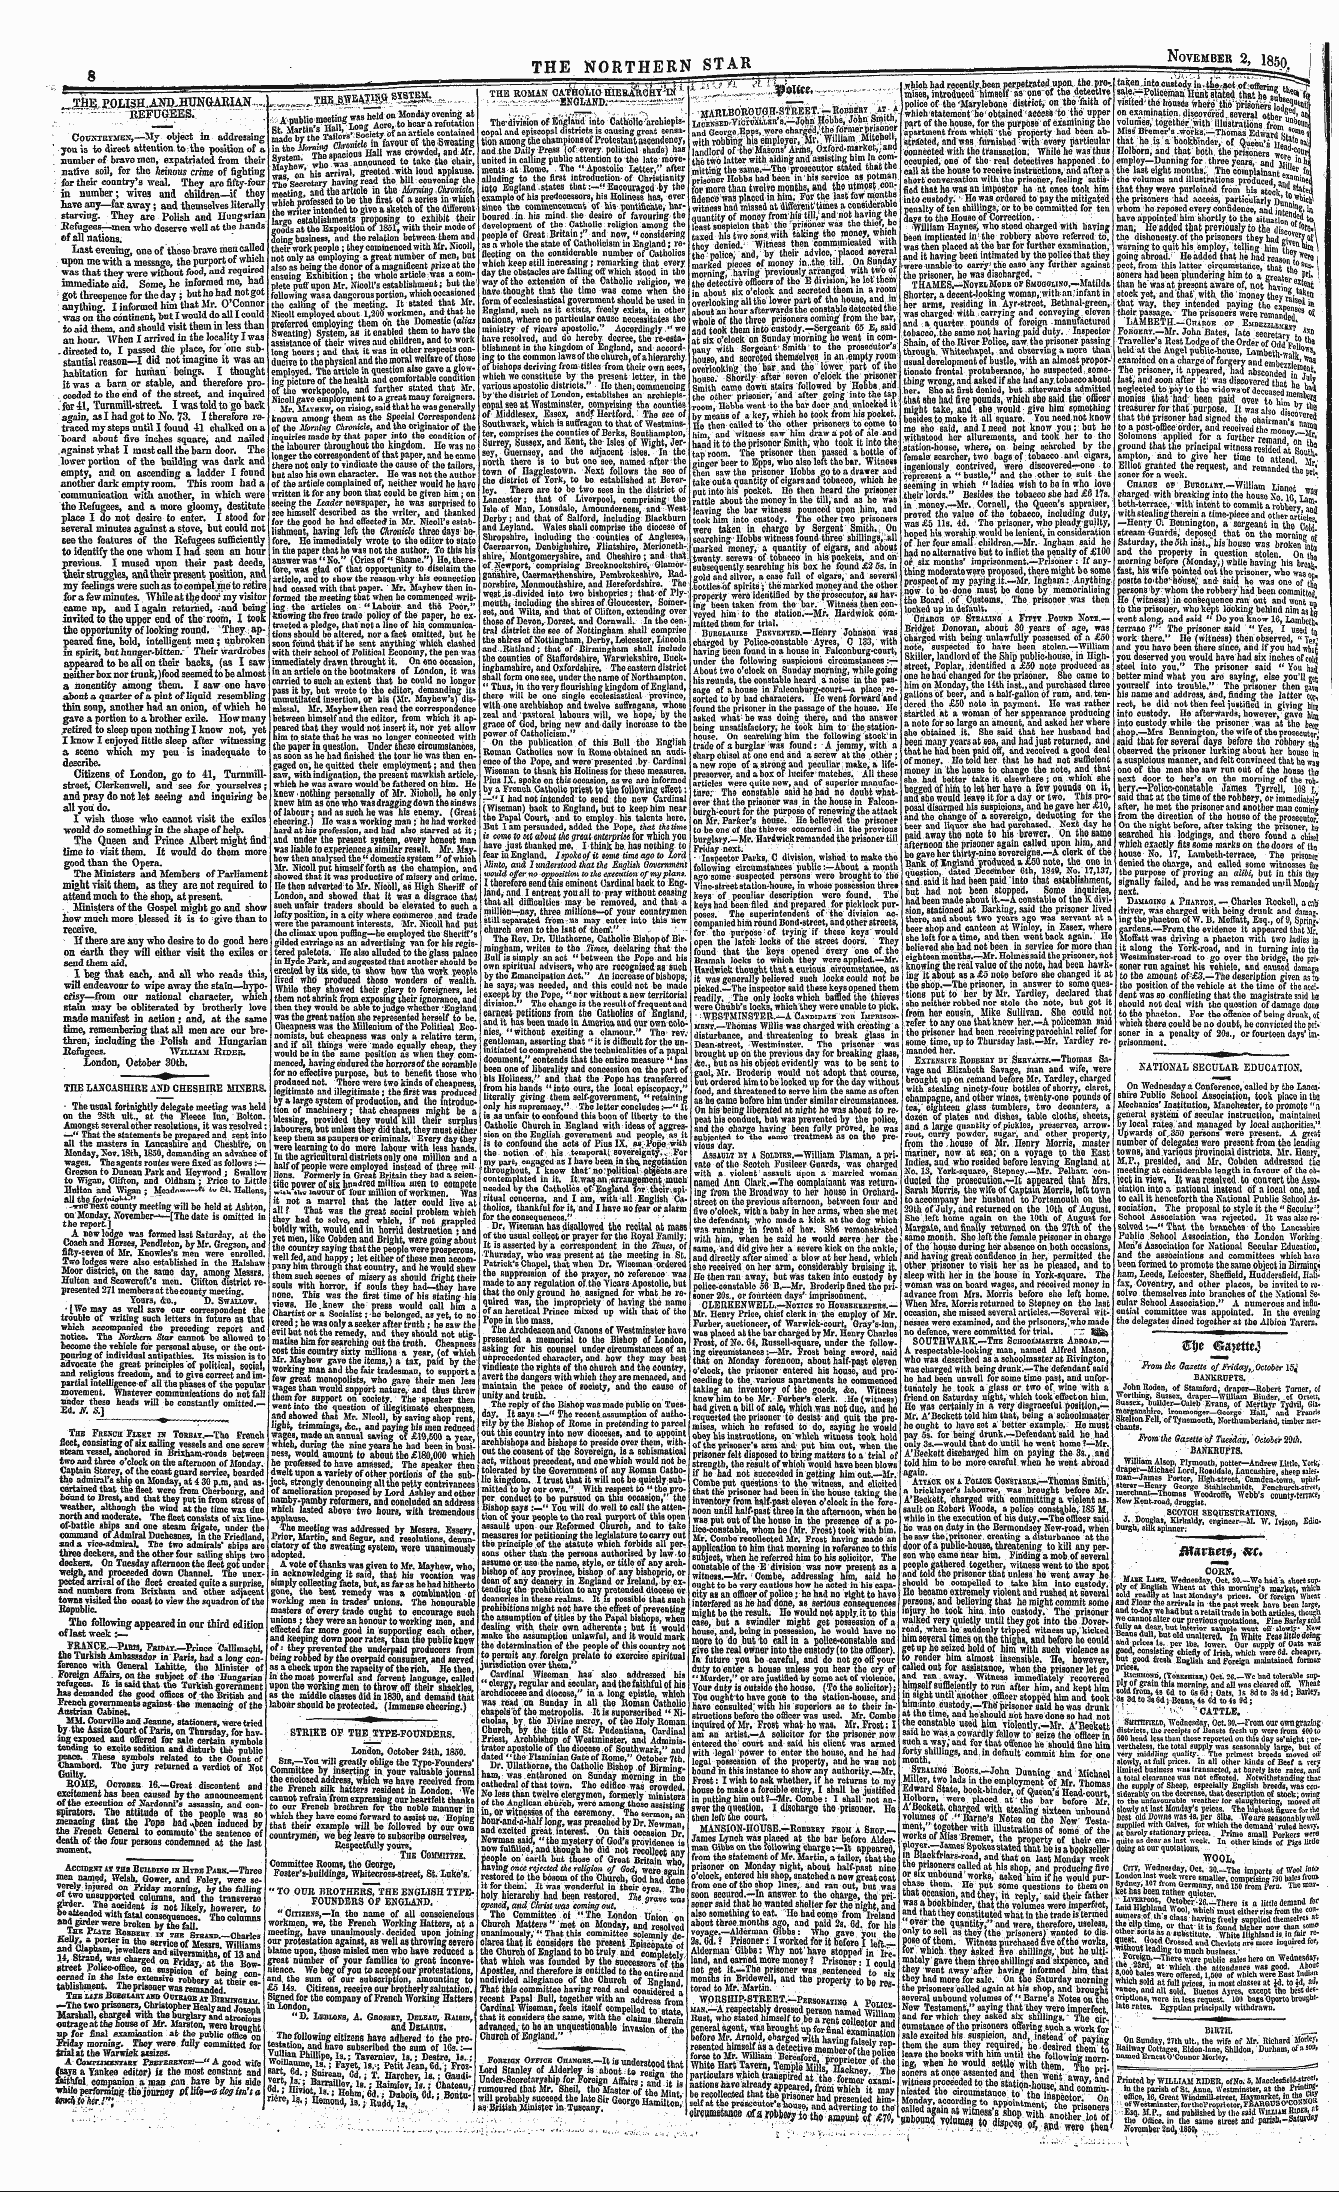 Northern Star (1837-1852): jS F Y, 2nd edition - Fflaitteid , &C*